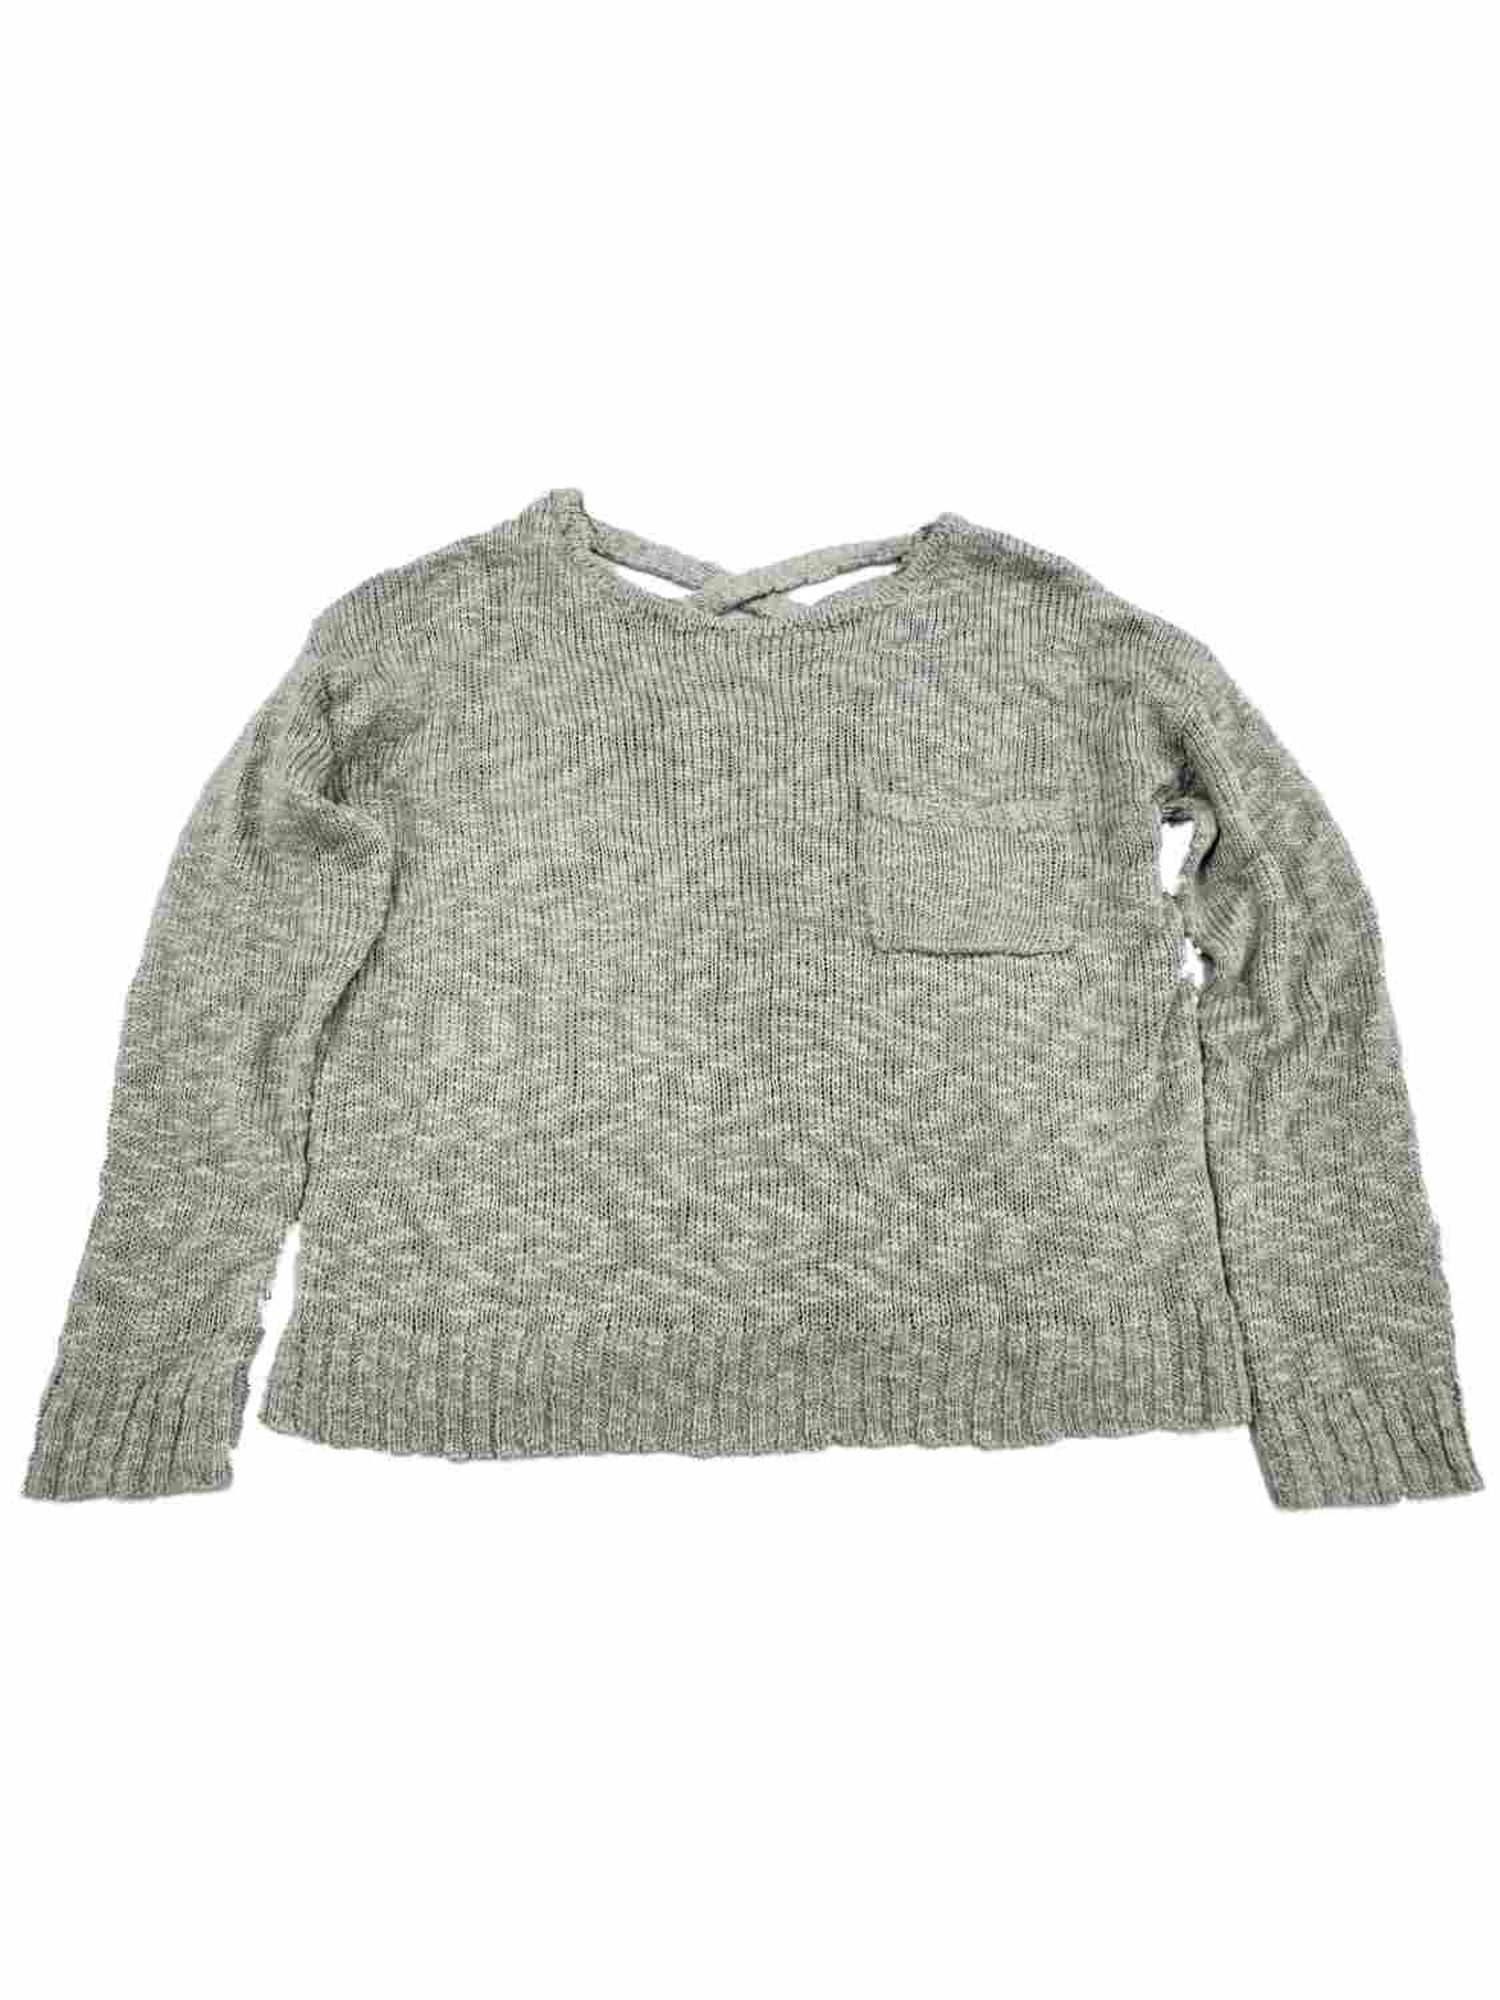 Fashion Knitwear Knitted Jackets Heine Cardigan light grey-white flecked casual look 